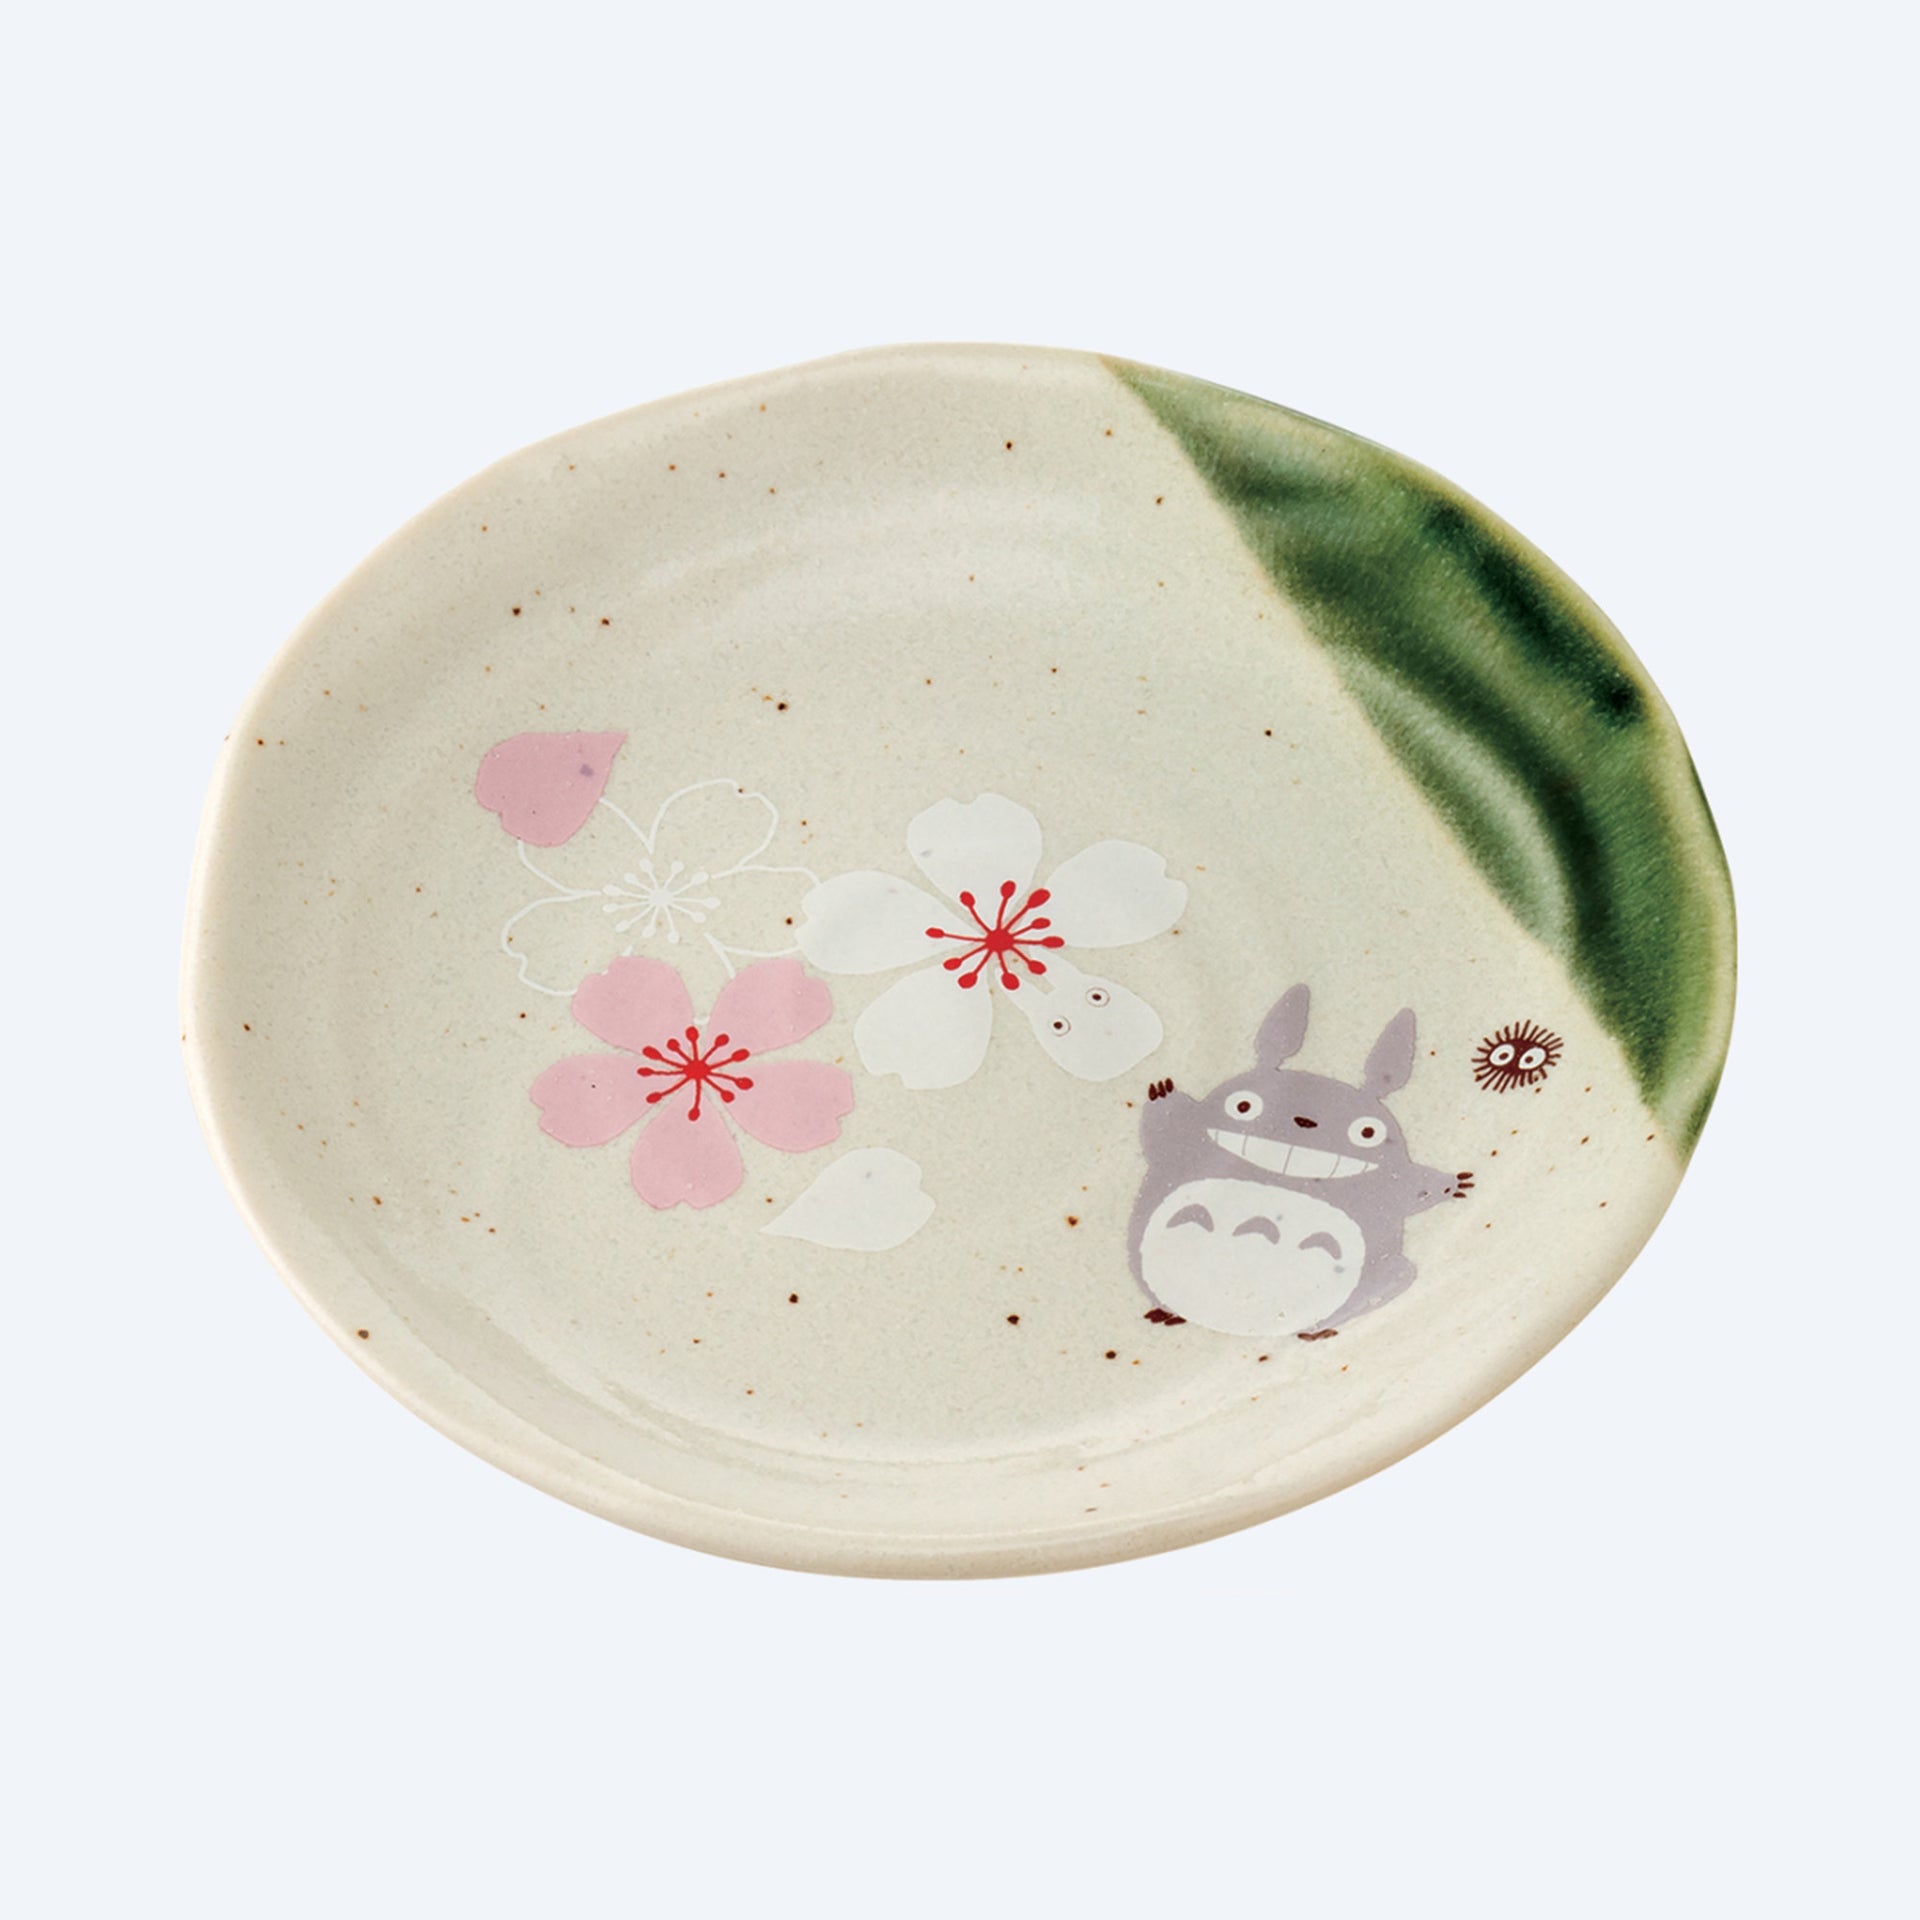 Totoro Traditional Japanese Dish Series - Small Plate Studio Ghibli